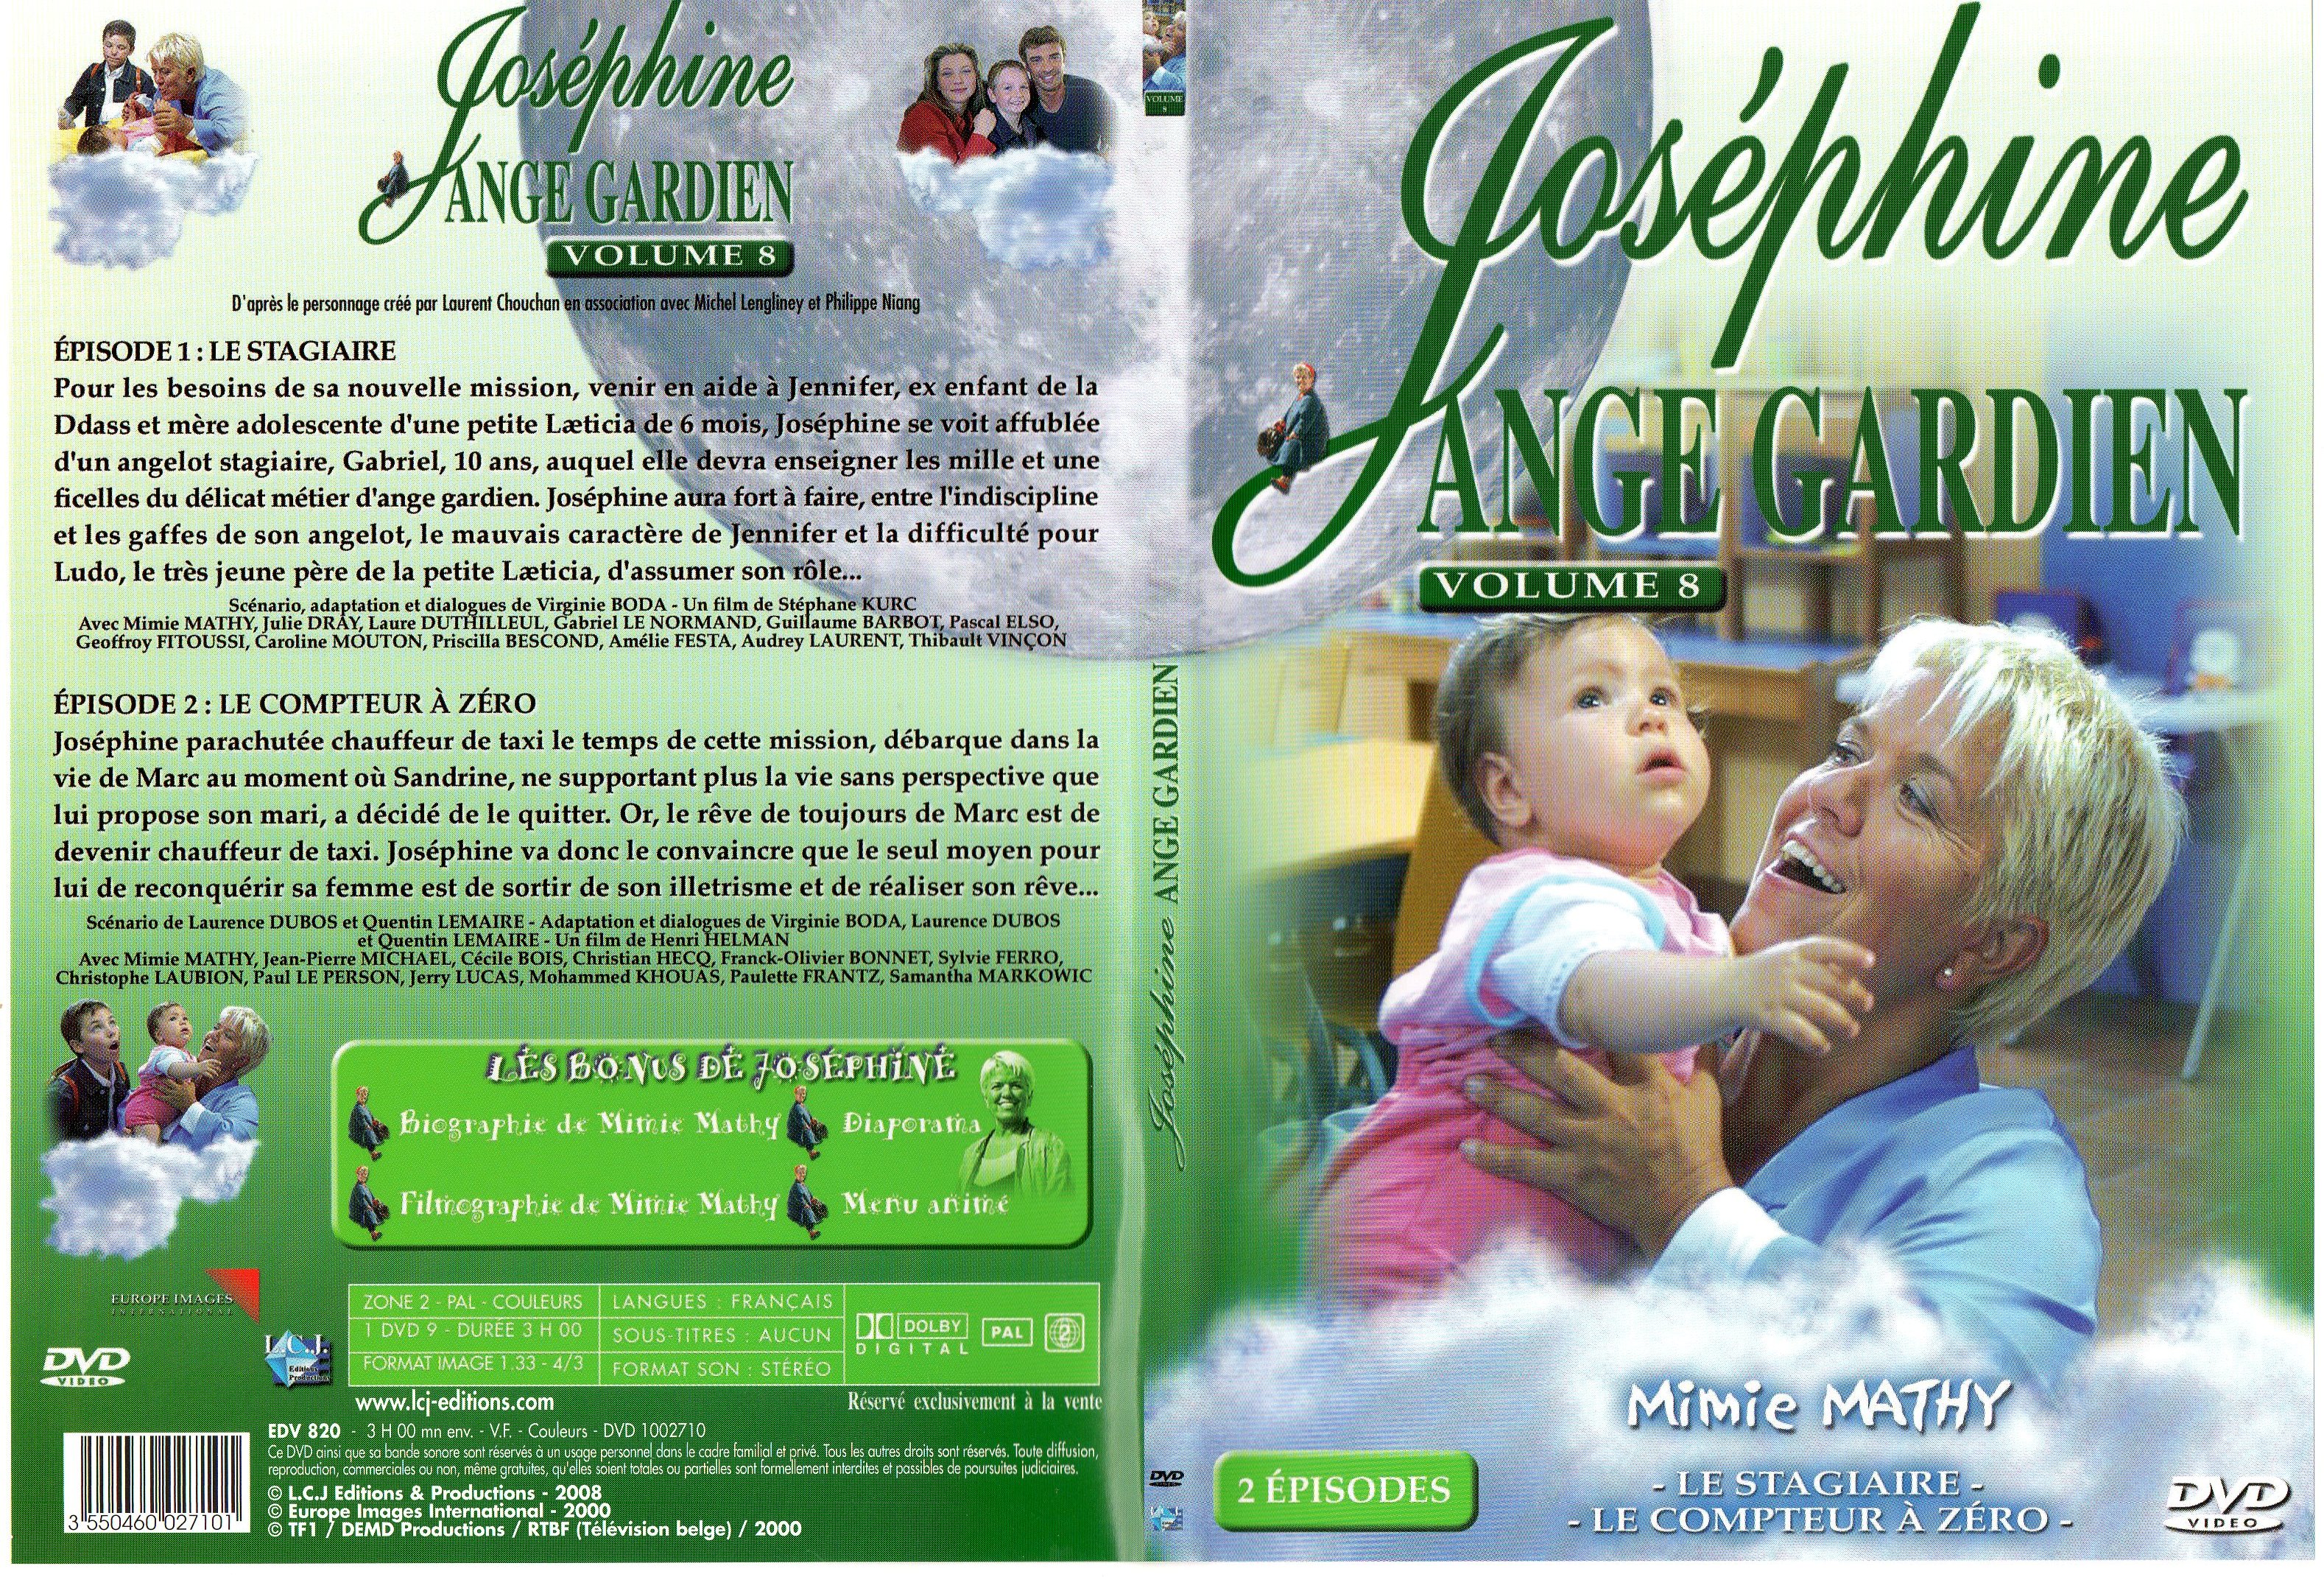 Jaquette DVD Josphine Ange Gardien saison 2 DVD 8